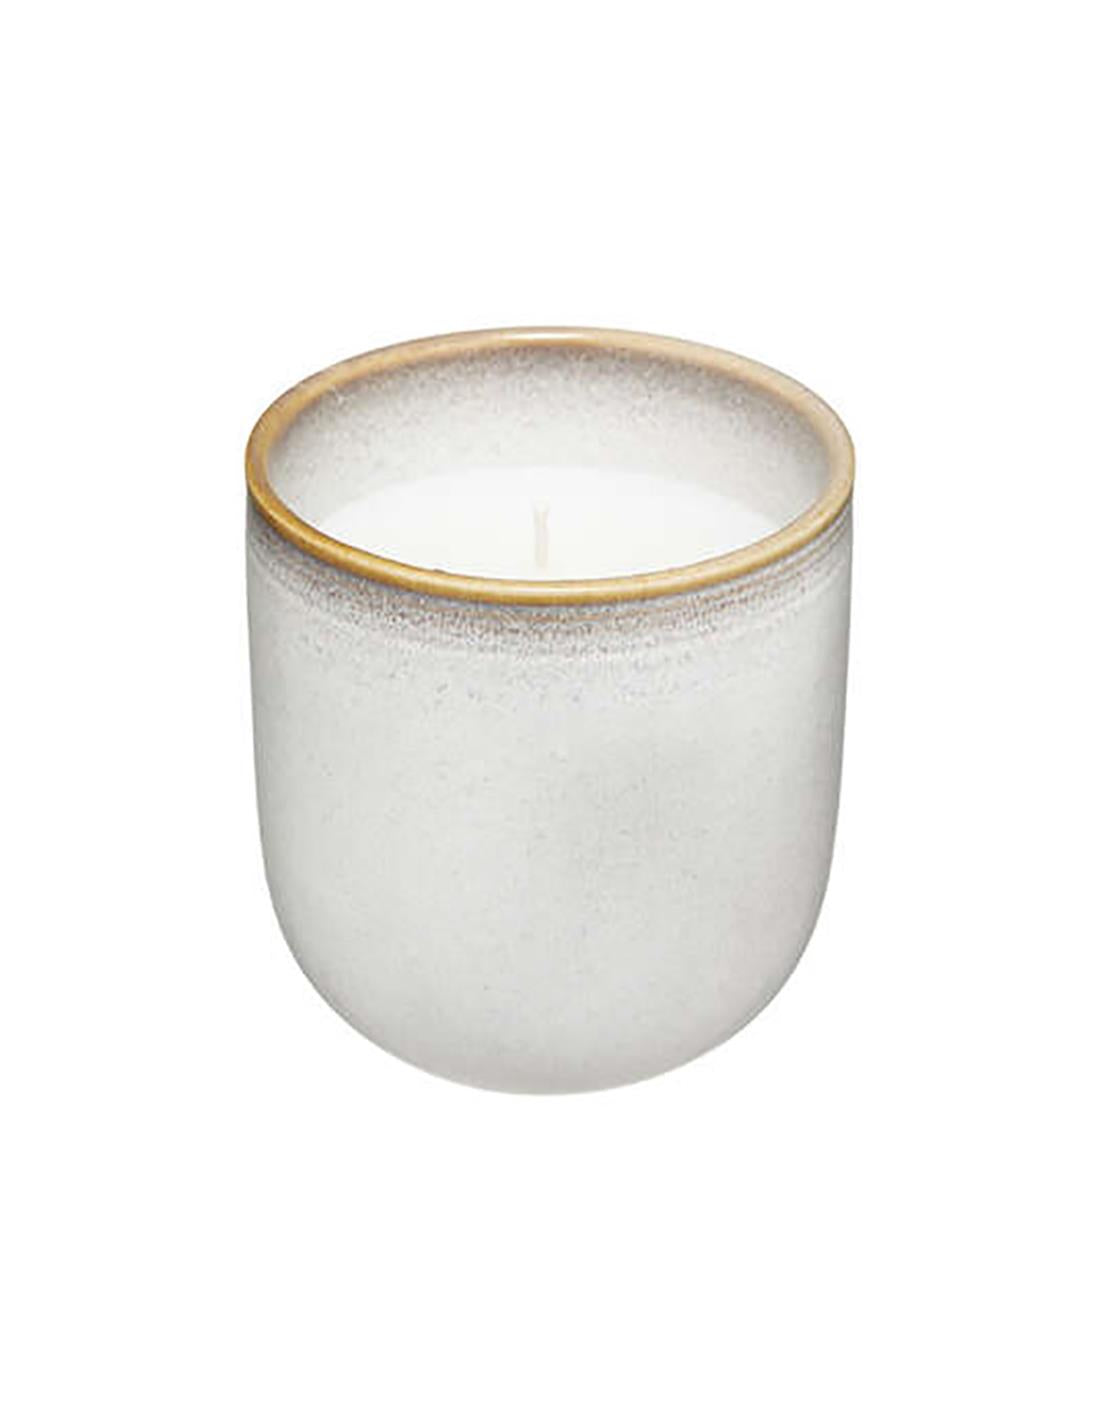 Ceramic Minimal Vanilla Candle paola van 195g